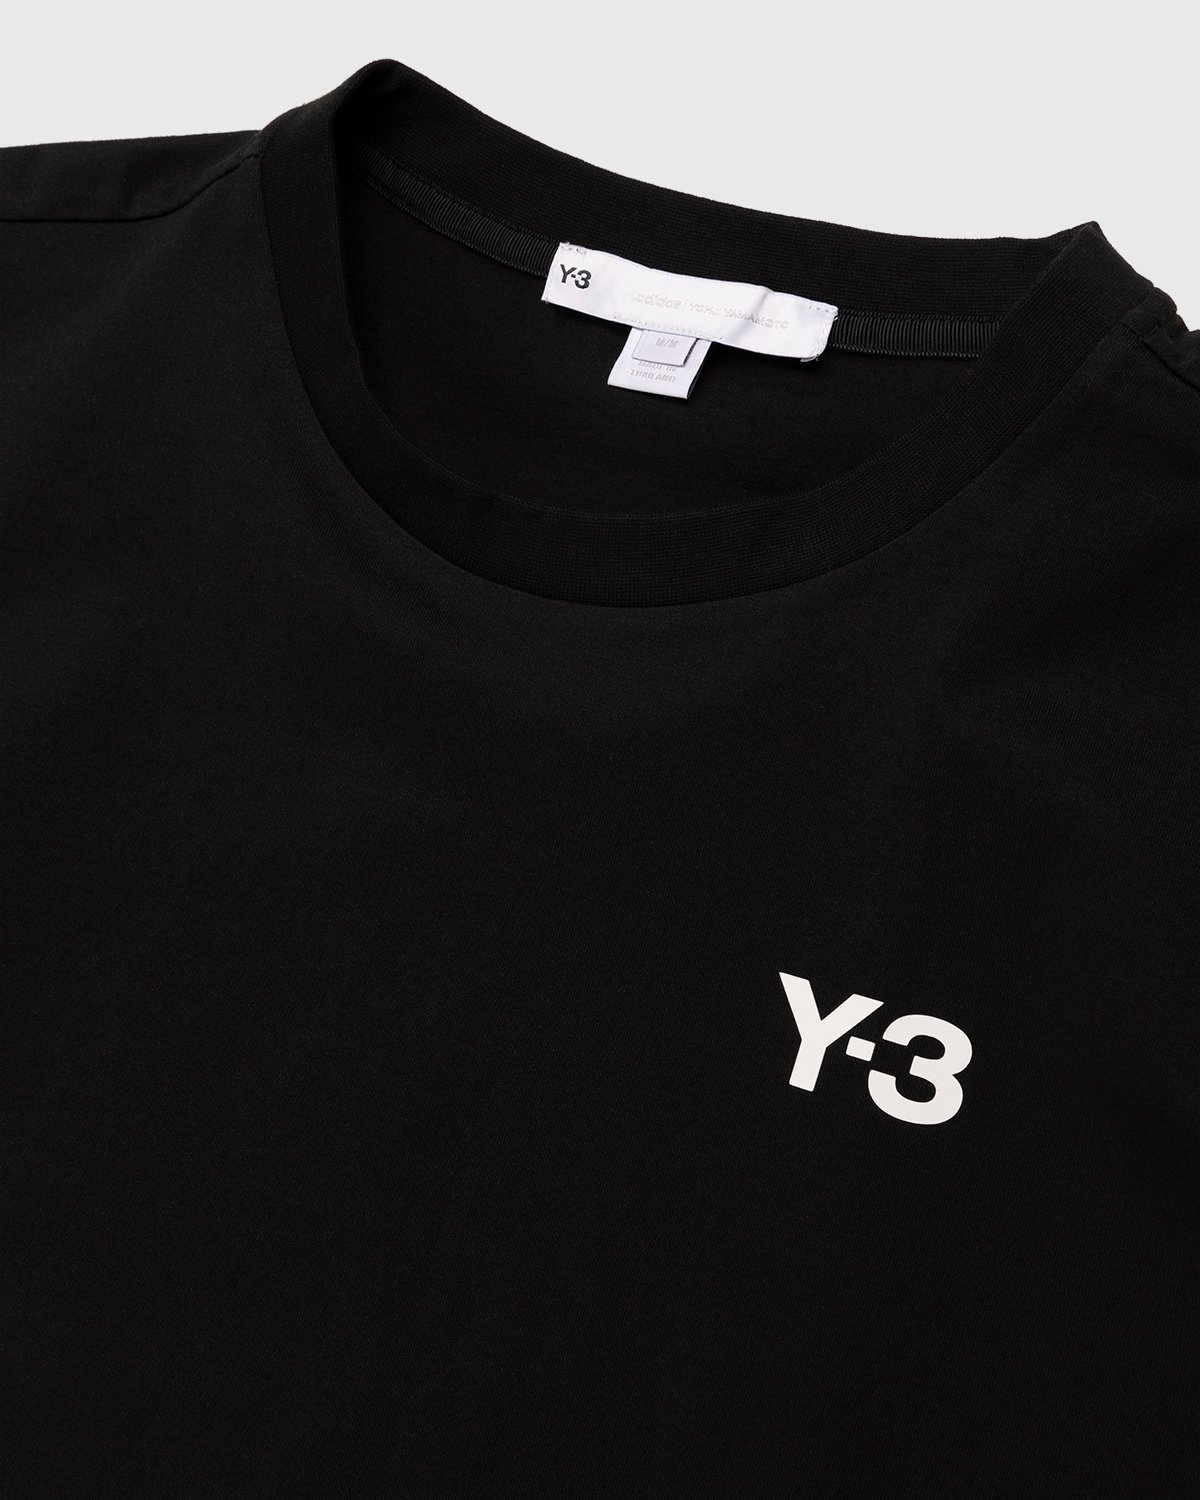 Y-3 - CH1 Commemorative T-Shirt Black - Clothing - White - Image 5